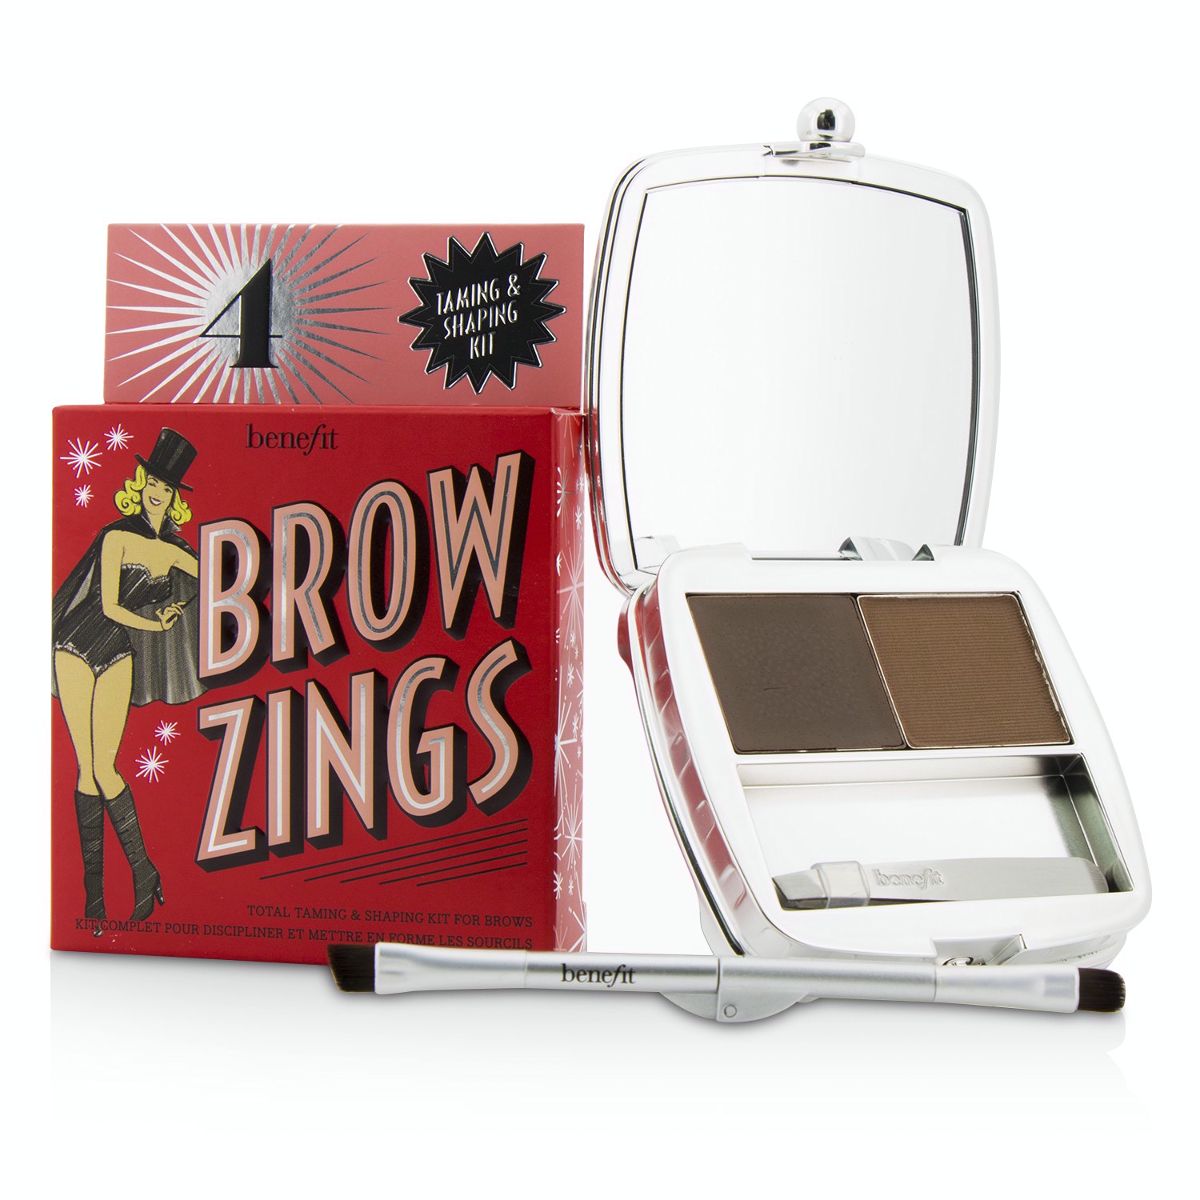 Brow Zings (Total Taming  Shaping Kit For Brows) - #4 (Medium) Benefit Image